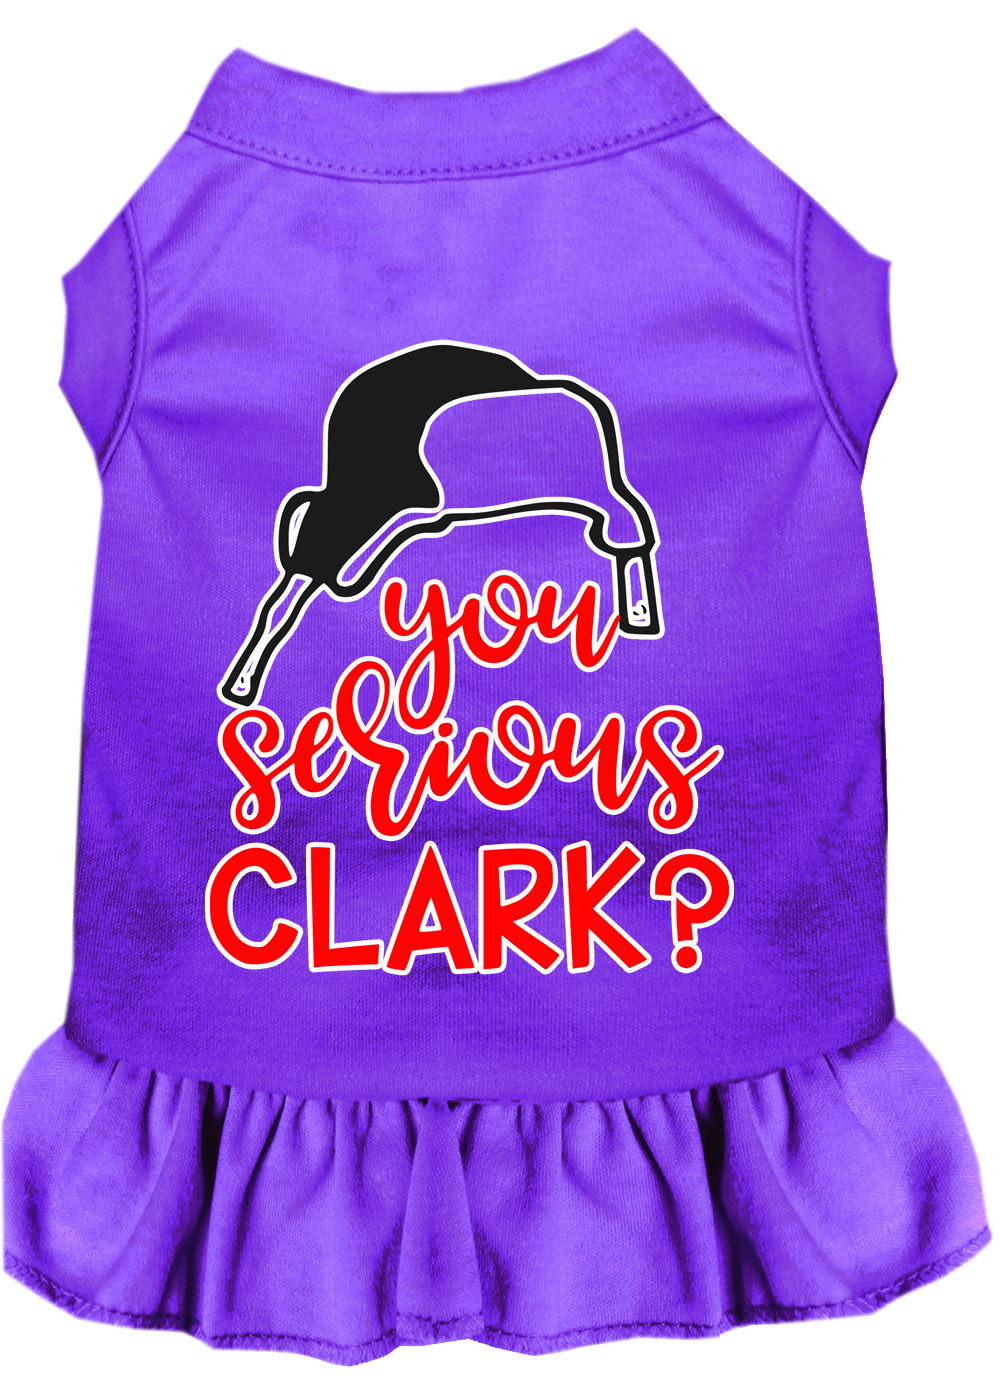 You Serious Clark? Screen Print Dog Dress Purple Lg